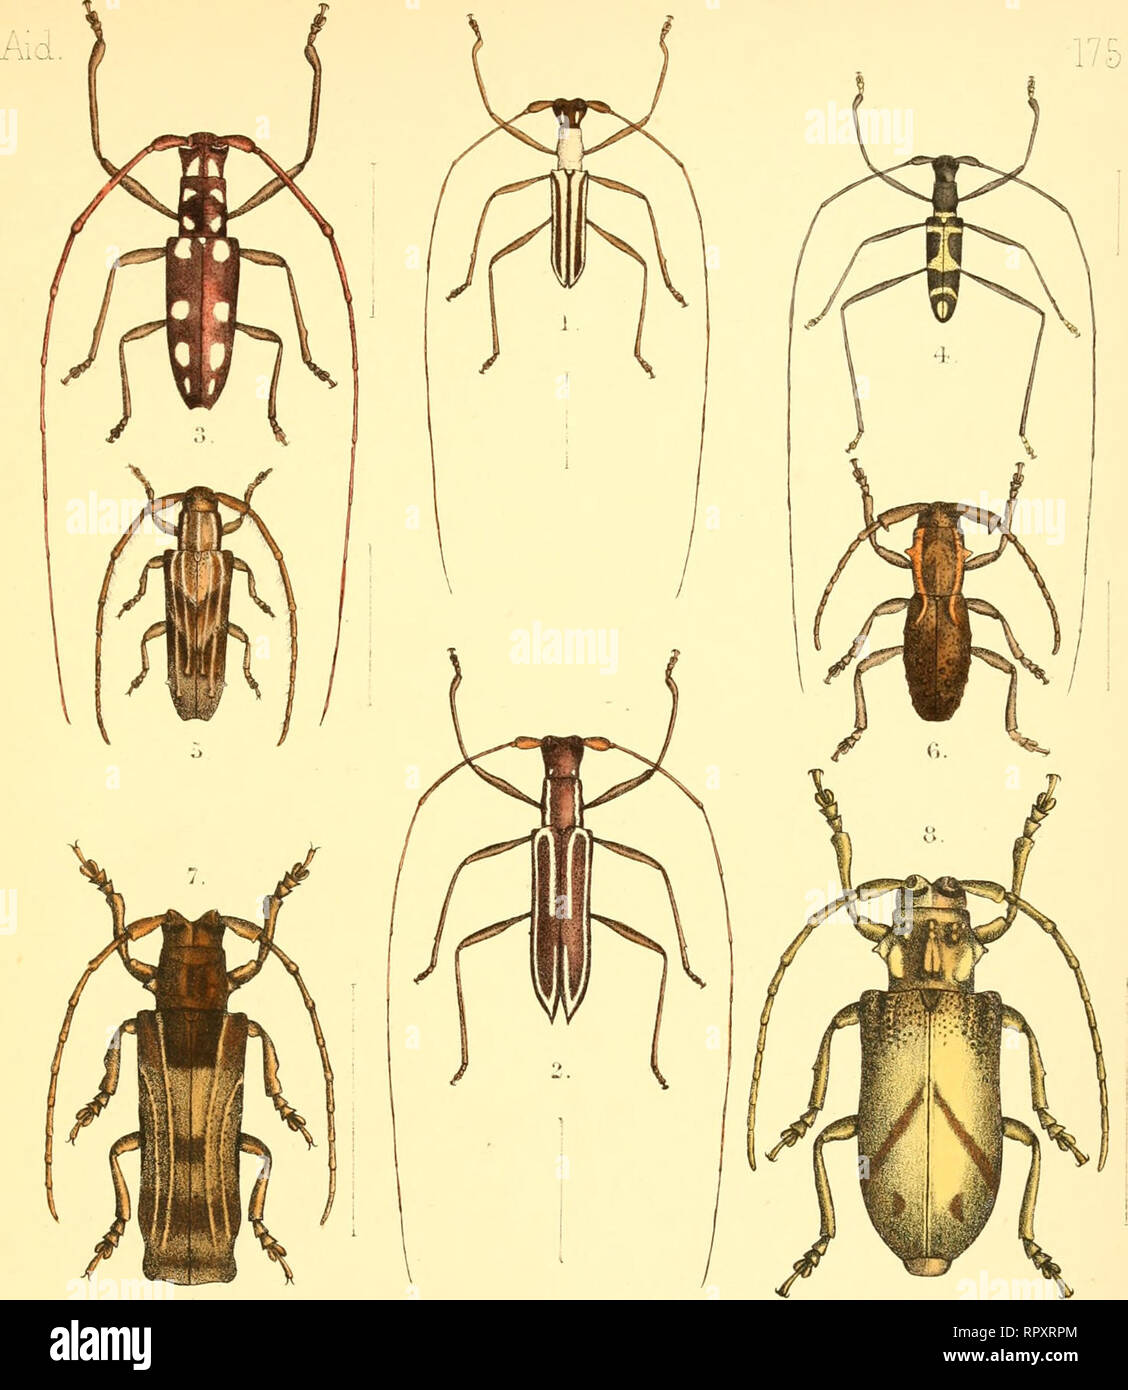 . Aid to the identification of insects. Insects. 1,2. CylindrepomusgpaTTiTnicus,cf,9,J?T77.-.&amp;J^ci^,yy&quot; //z'^t. V; [1860),j&gt;l2l Waigiou. S.Olenecamptus optatias, ?a&lt;sc£)e, Proc . 7,ool . Sec., (IS(66), p. 263. Penang. 4. CyhrLdrepoTTOJS laetus, Po^cc e , Trane. Ent. Joe. IV, (1868), V- 2/^^ ? Singapore. 6. Tanylairaa meian-ura,Pa6a)e^,Arm..&amp;. Mo^g.JV. Hist.IVII,(J836),p.244-. Madagascar- to.Anexodus aLqmlns,Feusooe., Artri. d.Mag. jY. Hust XVII, (1880), p 242. Bopneo /.Thylactus lori^i^erTas.Pa.r(x^&amp;,Jnn.&amp;-Ma^.Jr.IIh5t.JVII,(m'6)p.242 .YI Africa S.ChreosLes Ohevt} Stock Photo